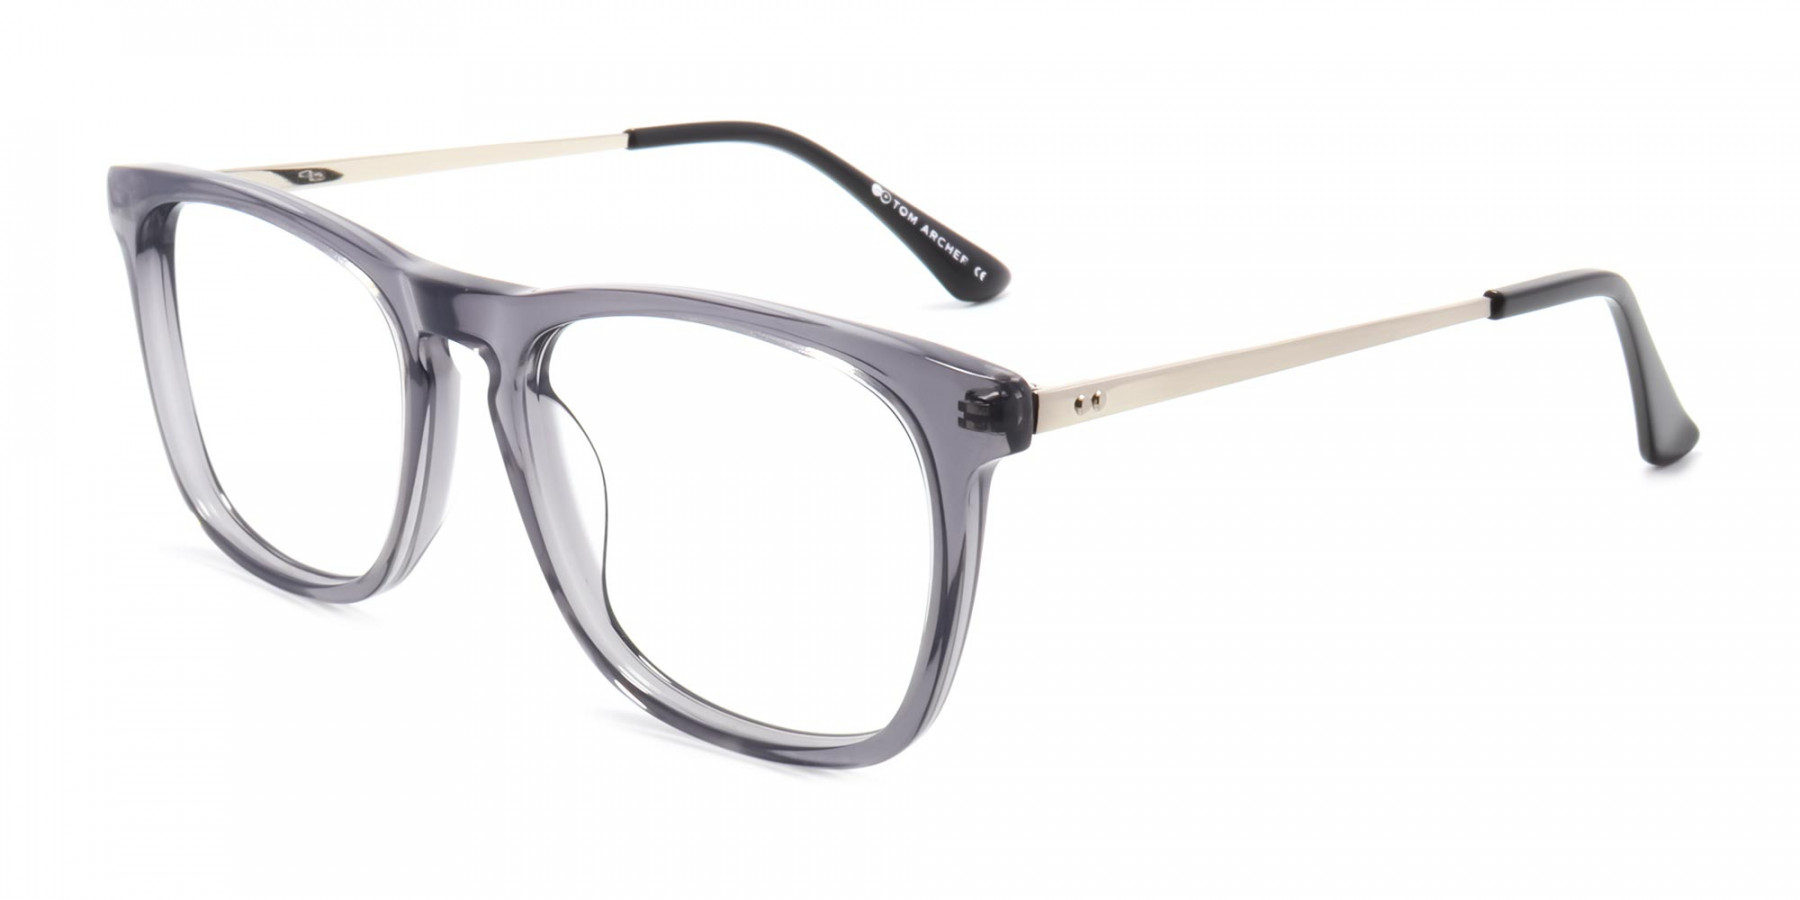 HENLEY 3 - Buy Grey and Black Glasses Frames | Specscart.®